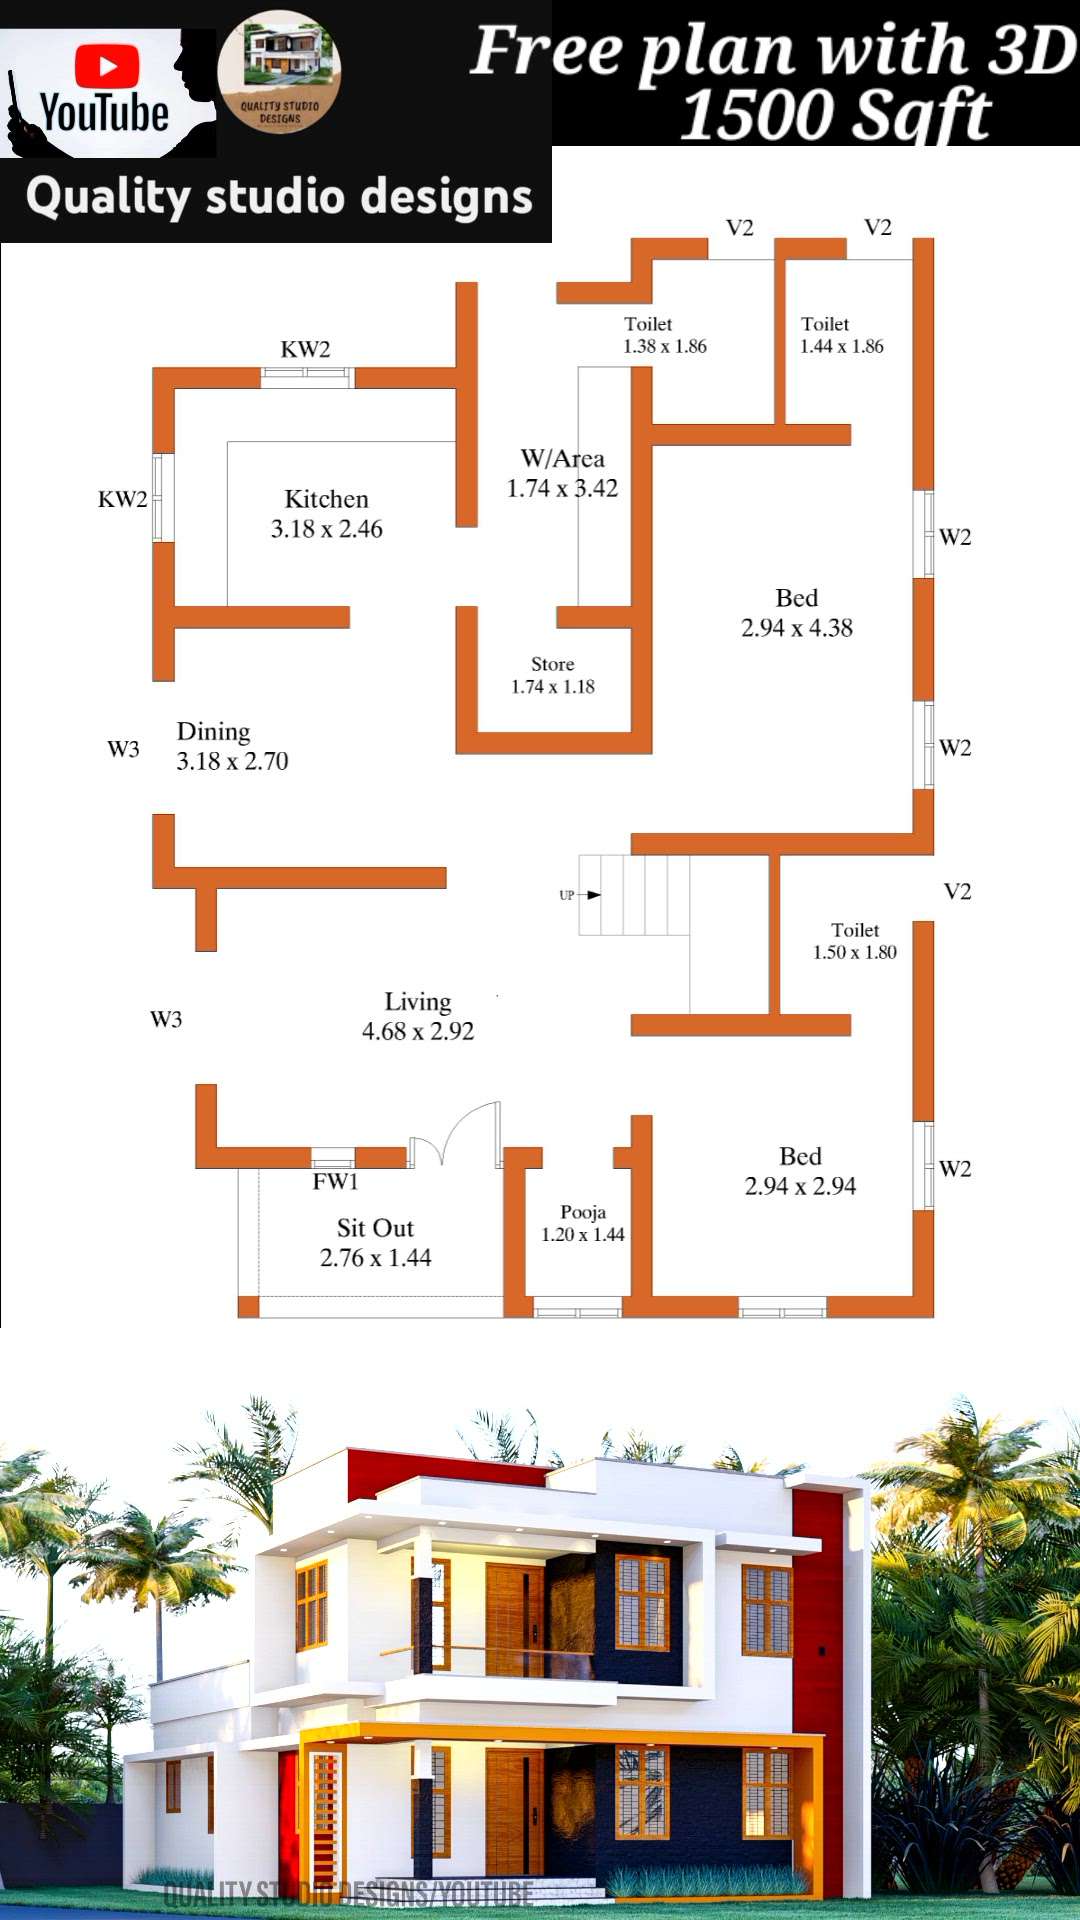 1500 Square Feet Plan with 3D elevation please call or whatsapp +91 7591926371#keralahomes #kerala #architecture #plan #ebgineers #keralahomedesign #interiordesign #homedecor #home #homesweethome #interior #keralaarchitecture #interiordesigner #homedesign #keralahomeplanners #homedesignideas #homedecoration #keralainteriordesign #homes #architect #archdaily #ddesign #homestyling #traditional #keralahome #vasthu #vasthuplan #freekeralahomeplans #homeplans #keralahouse #exteriordesign #architecturedesign #ddrawing #ddesigner #luxury #art #interiorstyling #homestyle #livingroom #inspiration #designer #handmade #homeinspiration #homeinspo #house #realestate #kitchendesign #style #homeinteriordesign #keralaarchitectures #budgethomes #EastFacingPlan